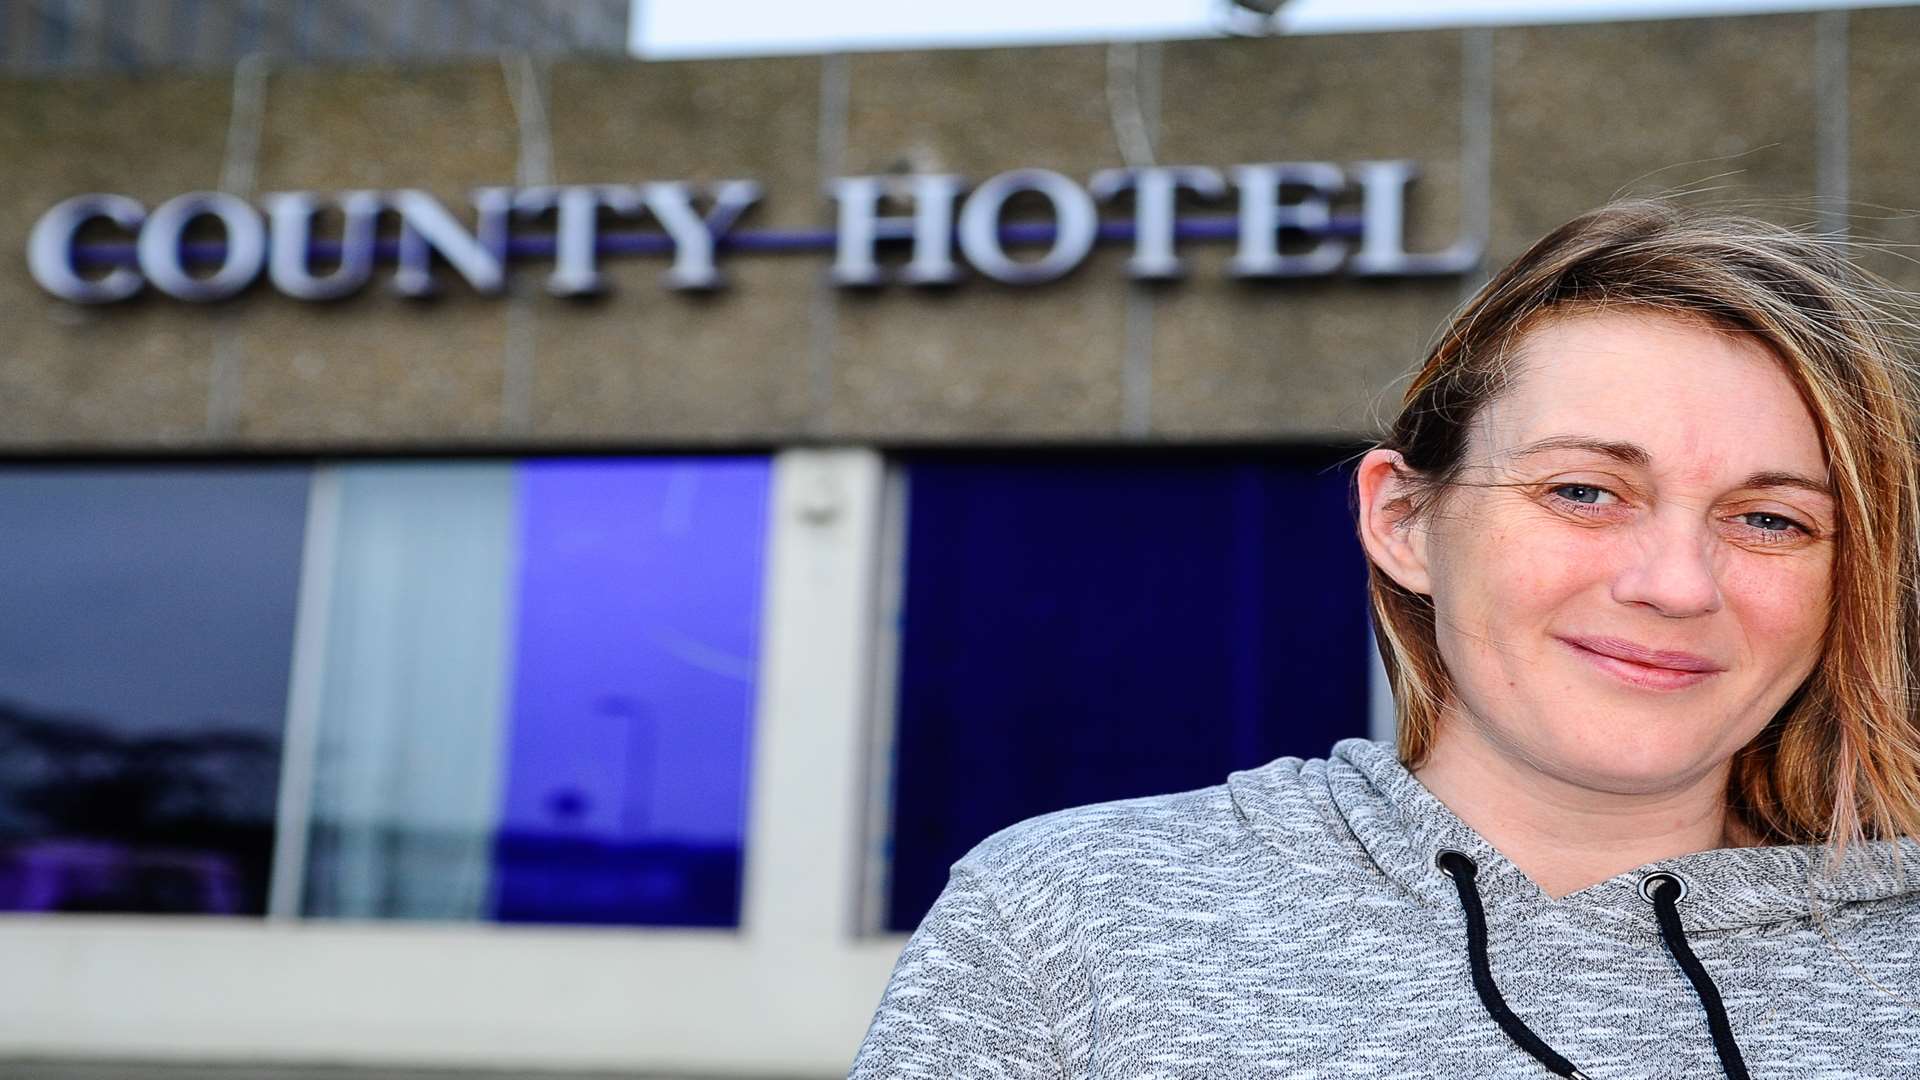 Helen Alce praises the hotel's service